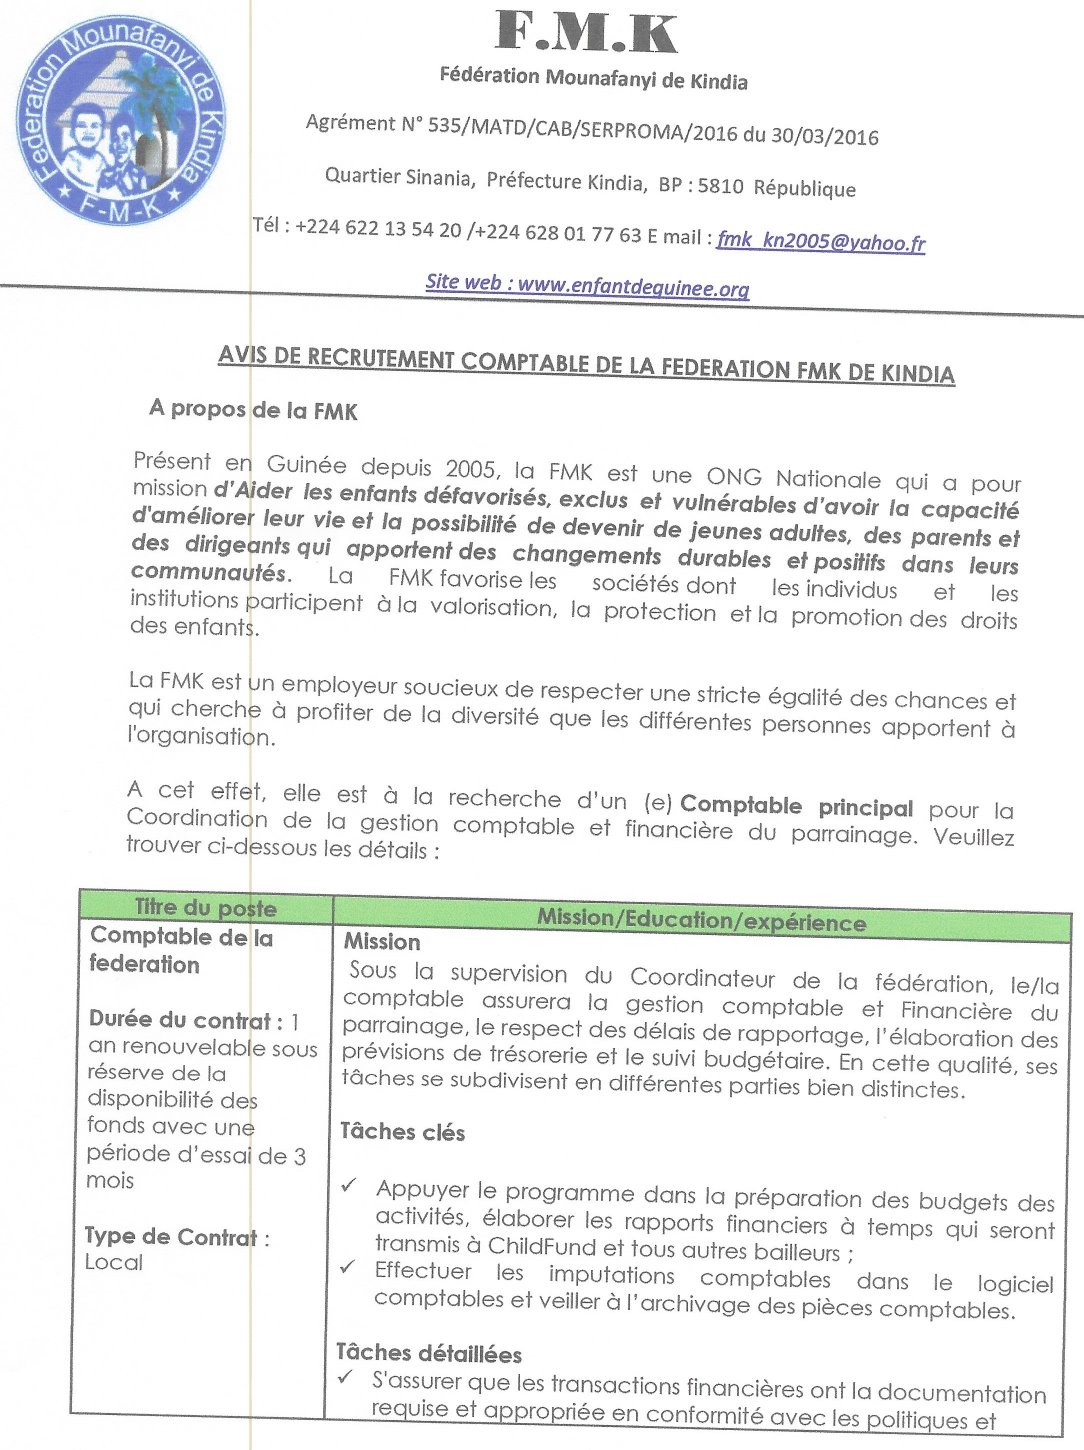 AVIS DE RECRUTEMENT COMPTABLE DE LA FEDERATION FMK DE KINDIA | page 1